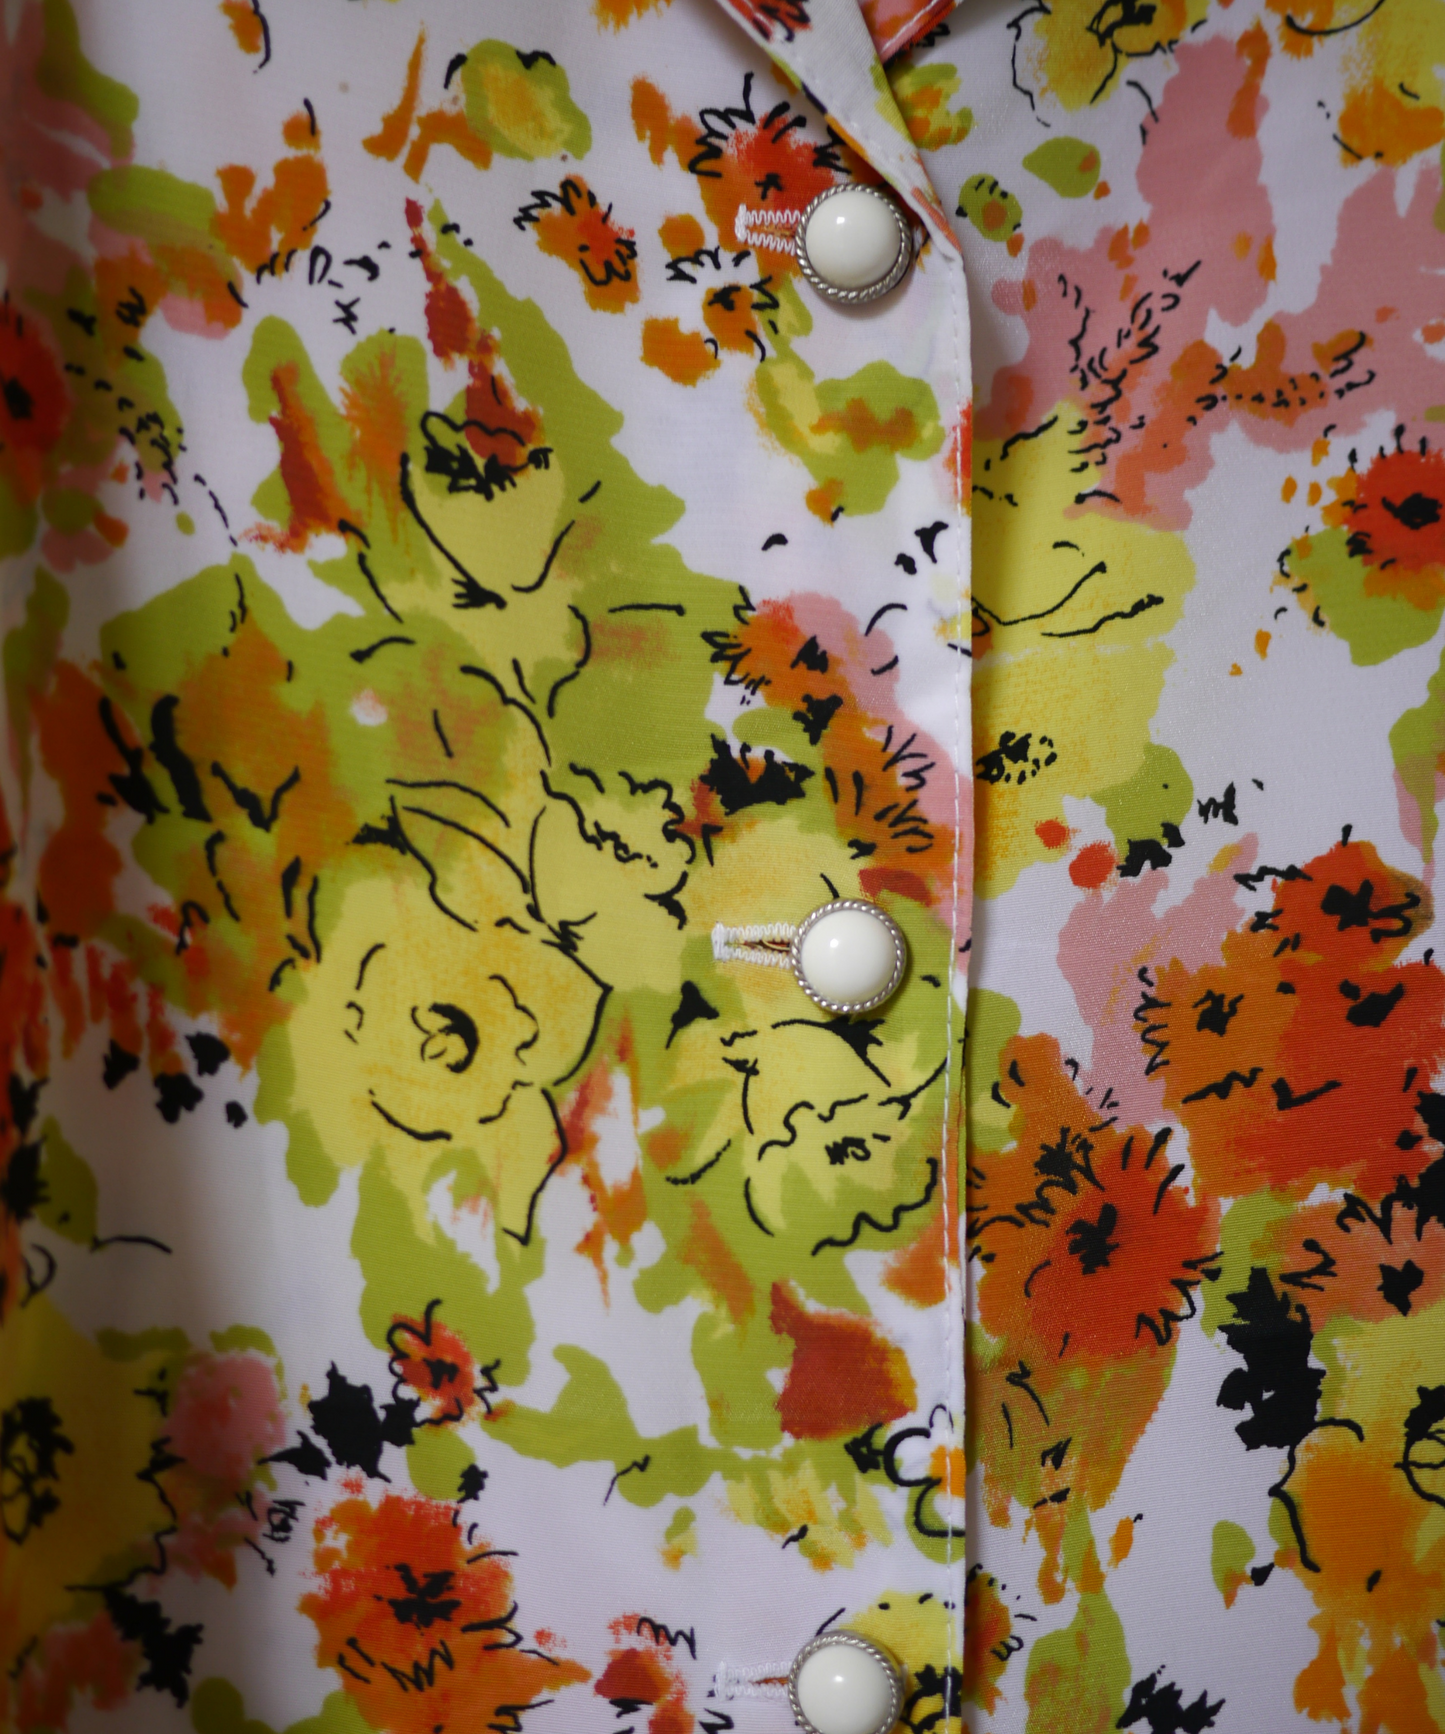 Bloemen print blouse | m/l/xl | Marieke